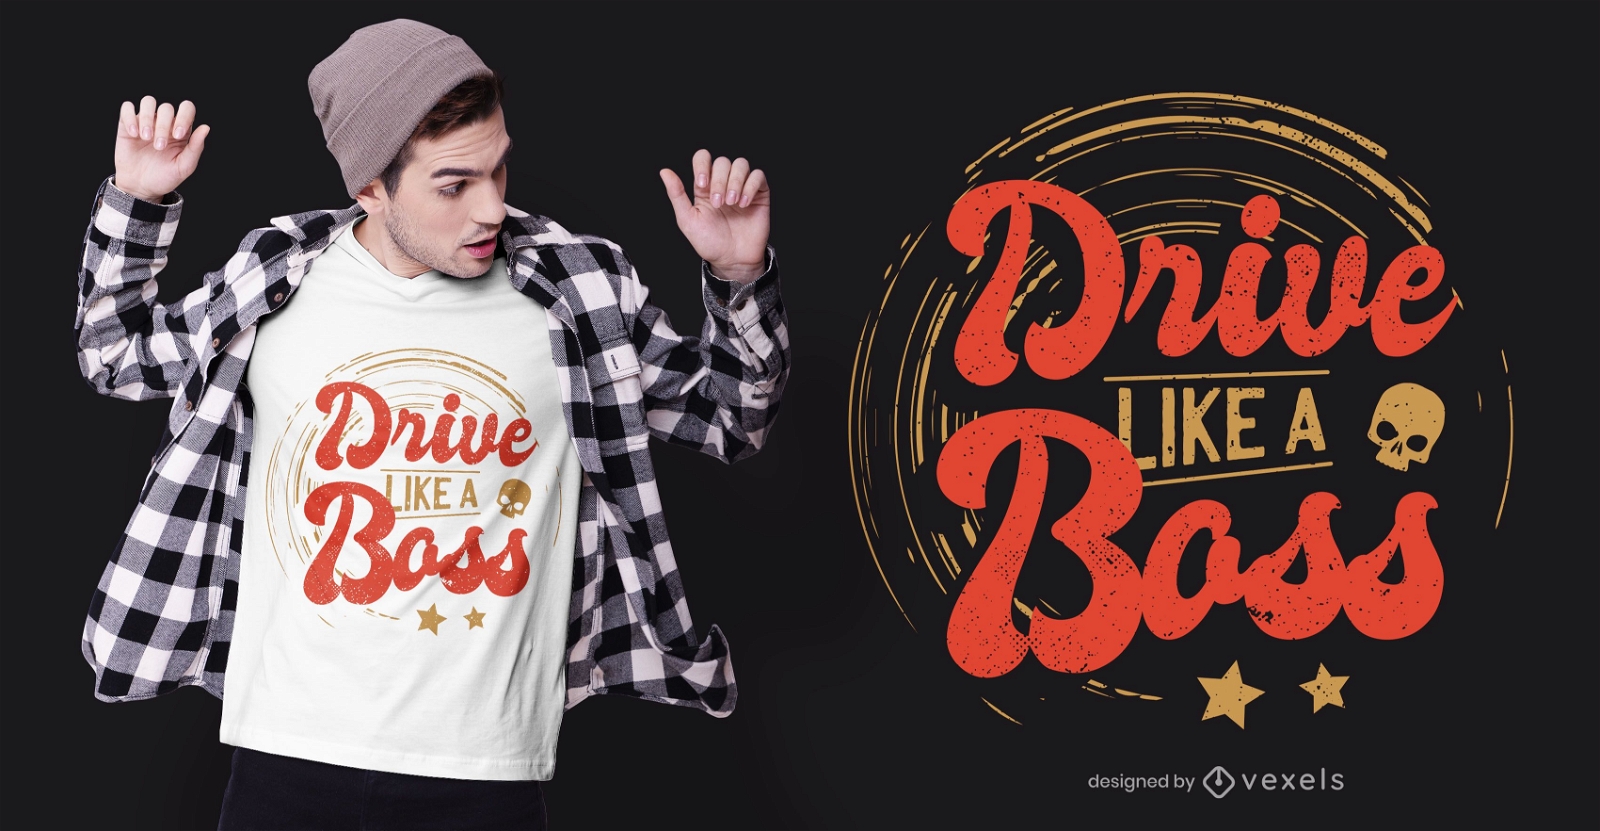 Drive Boss Quote T-shirt Design